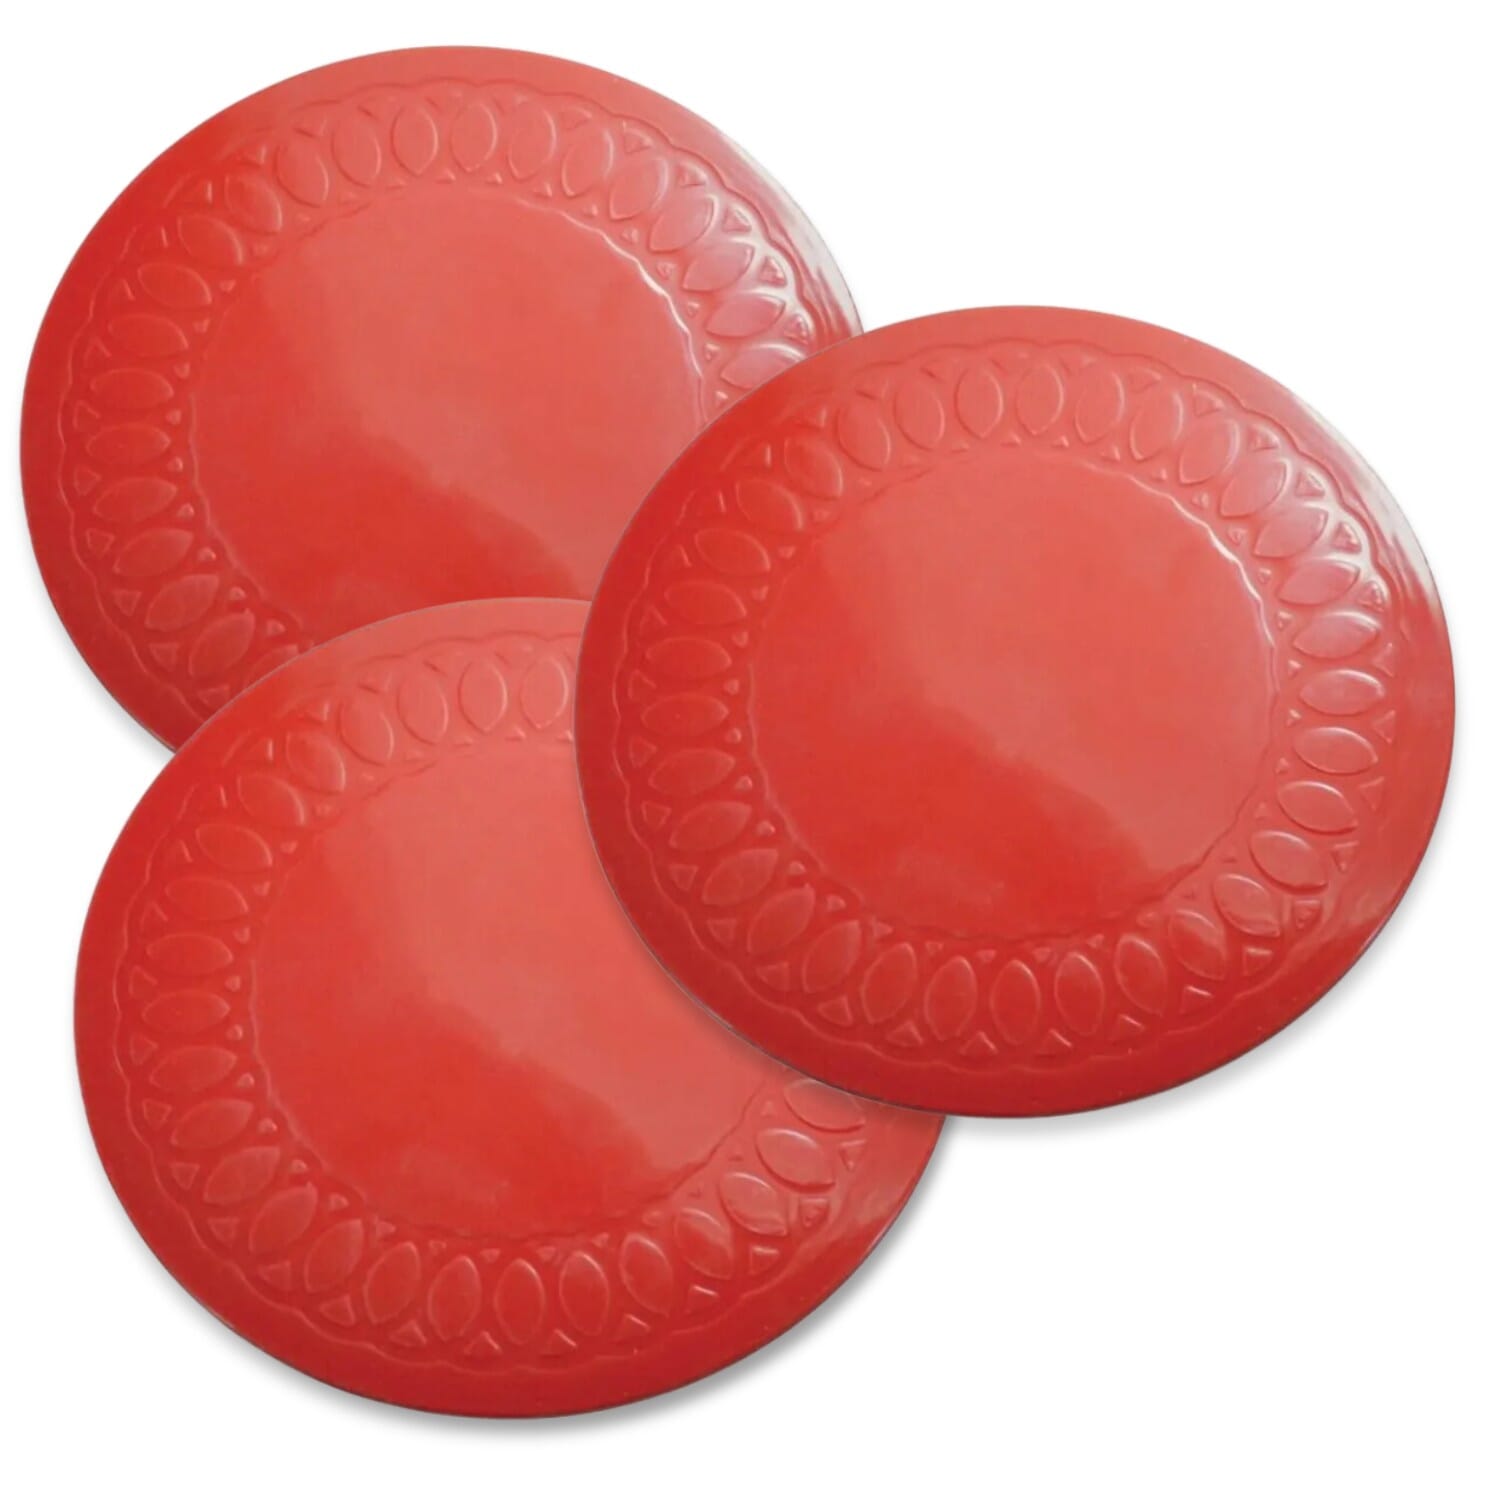 View Tenura Silicone Rubber Anti Slip Circular MatCoaster 19 cm Pack of 3 Red information